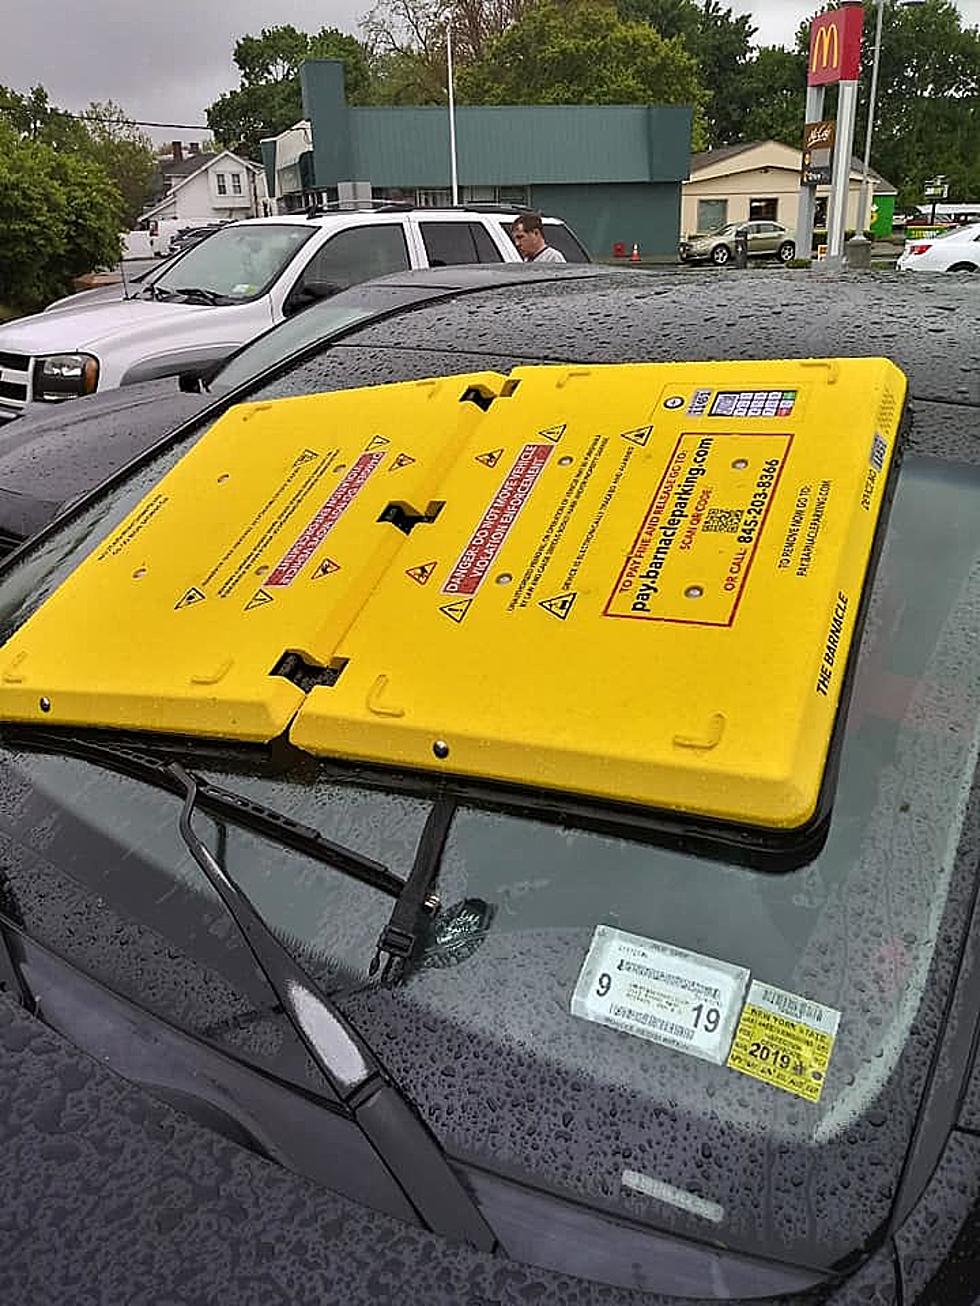 Hudson Valley McDonald’s Responds to Parking Boot Complaints